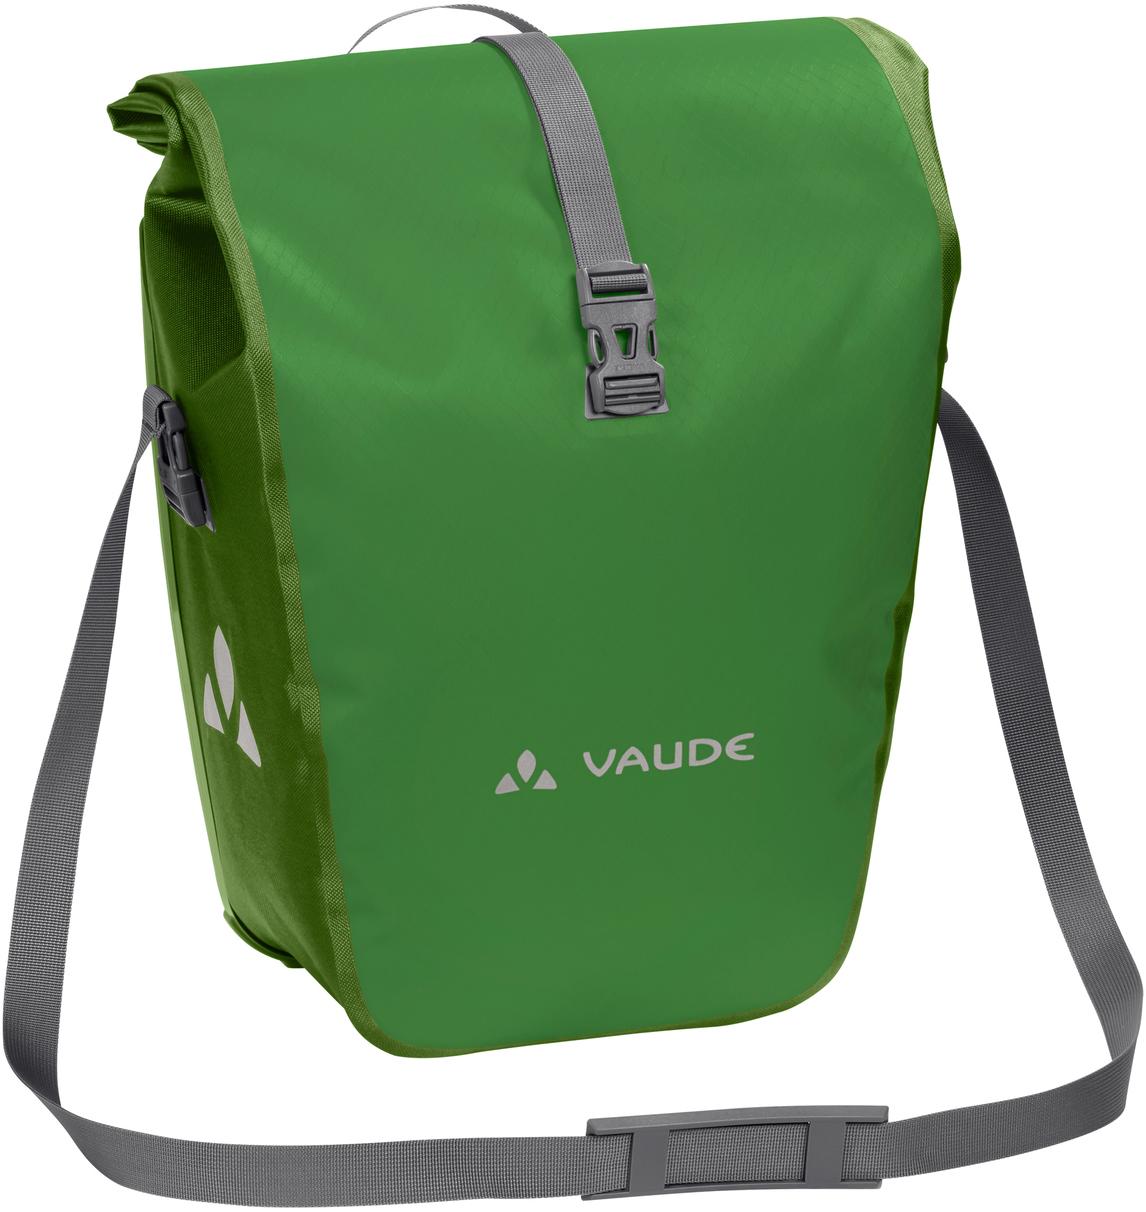 Vaude Aqua Rear Pannier Bags (pair)  Parrot Green